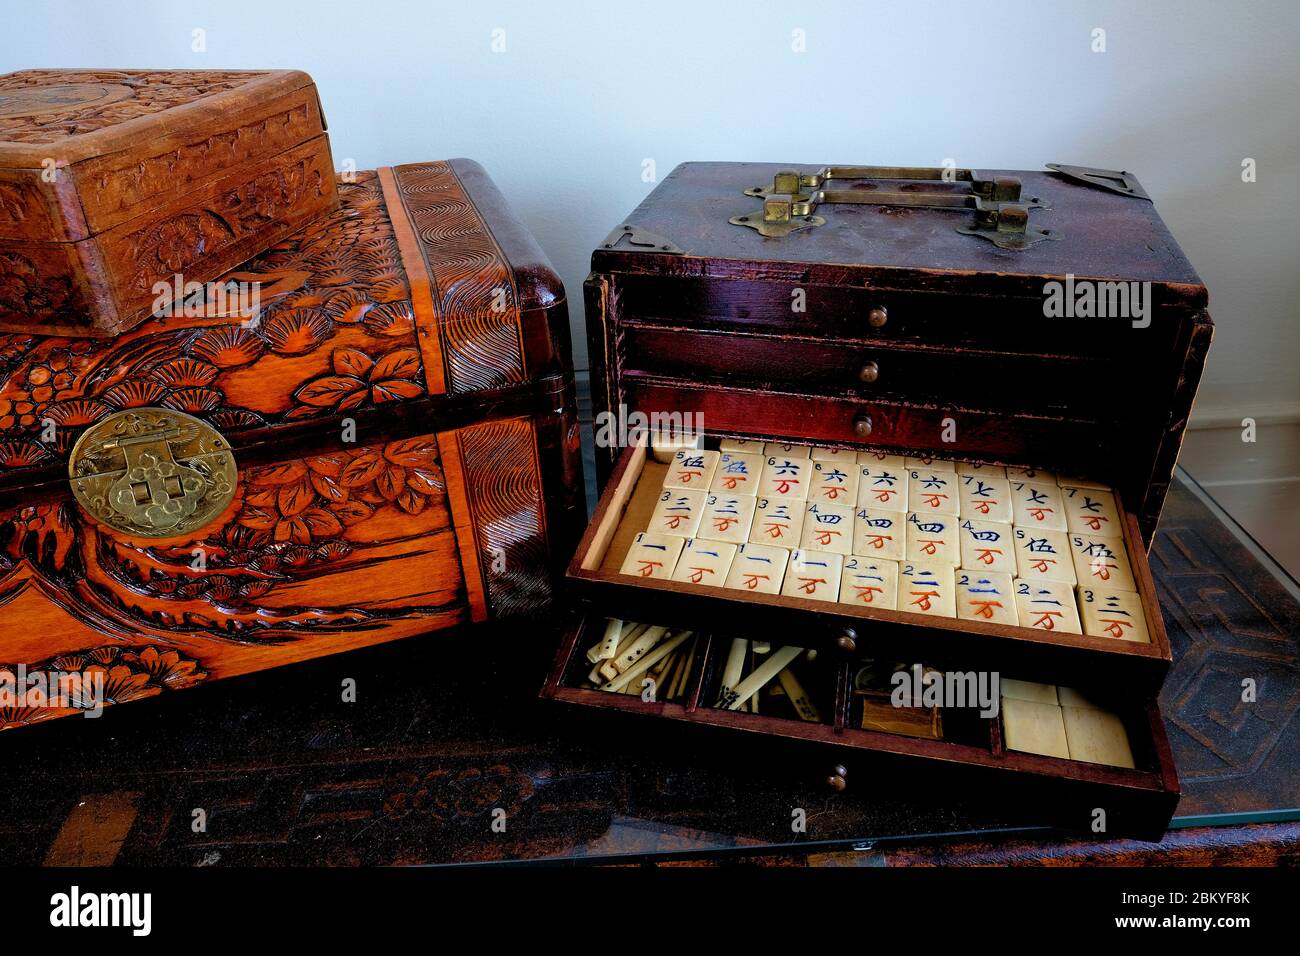 How Do I Know if my Mahjong Set is Complete? – Mahjong Treasures